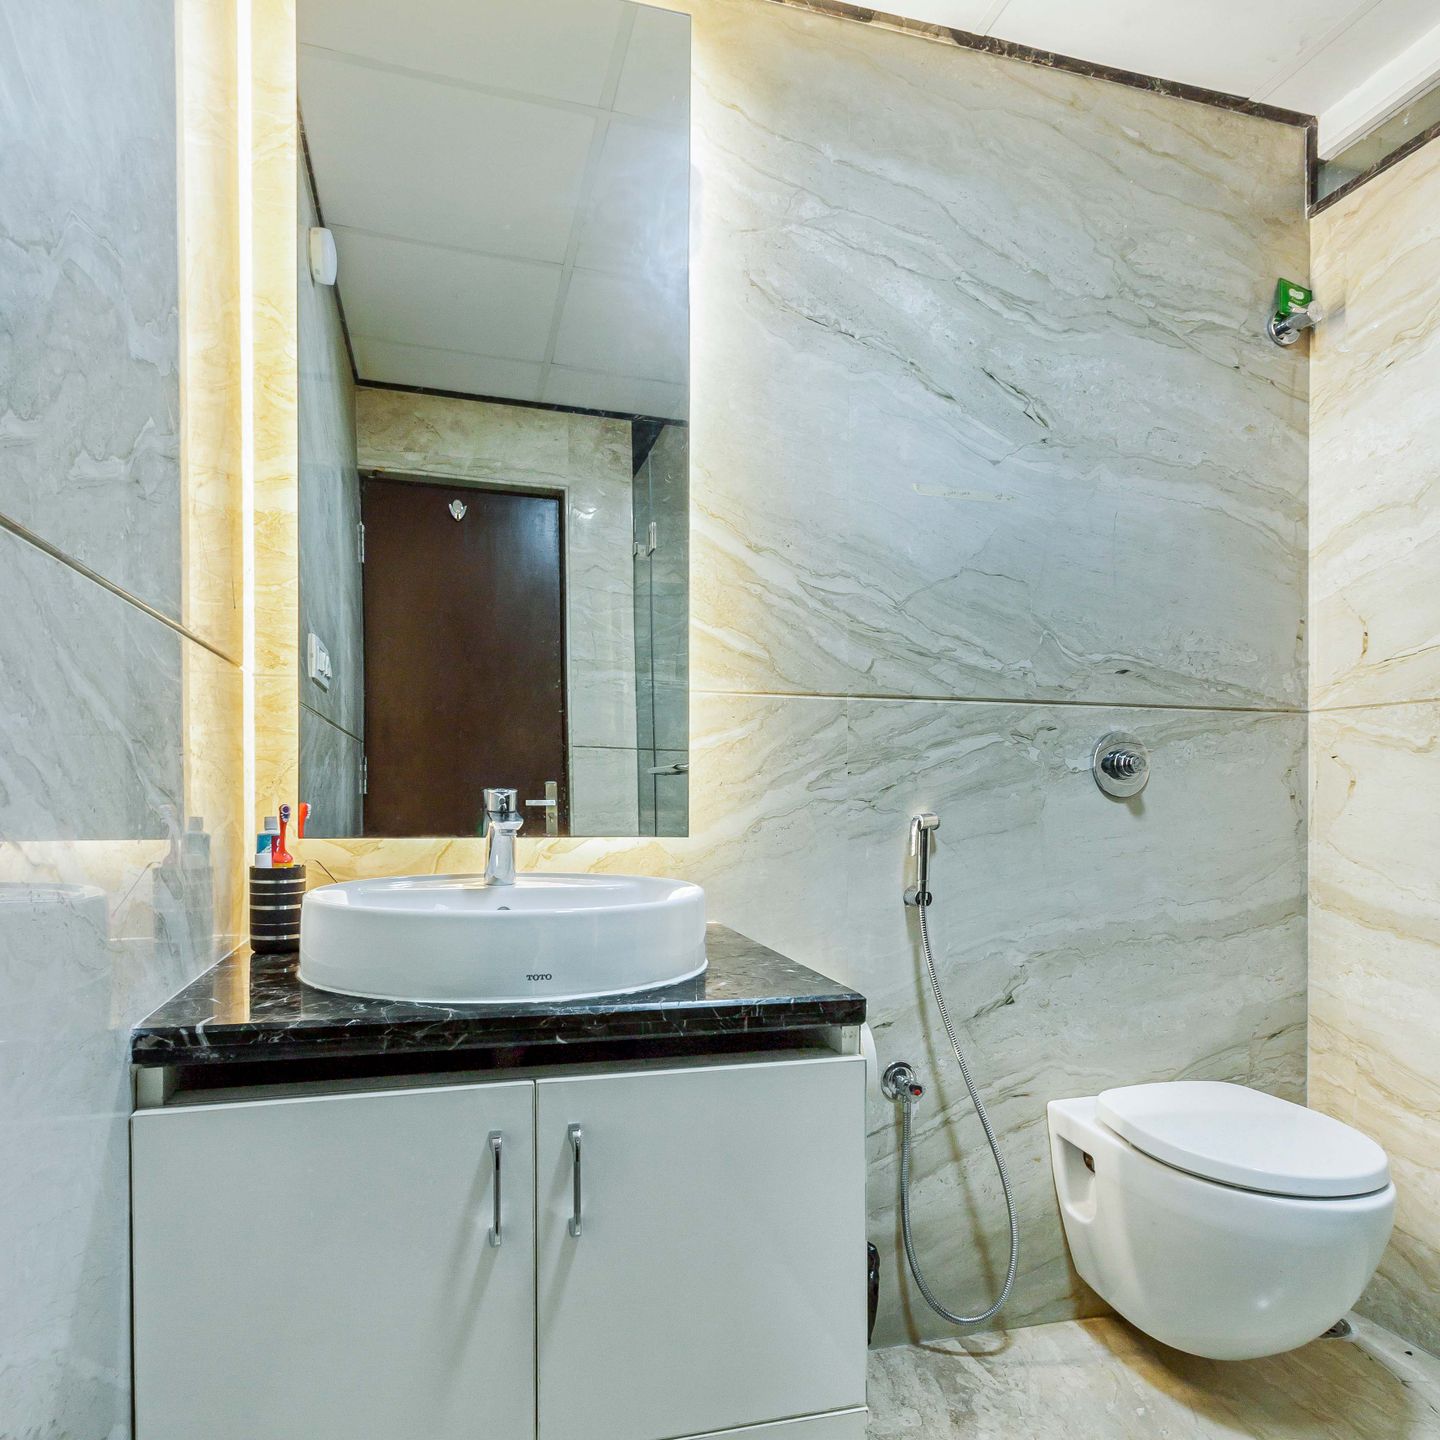 Minimal Bathroom Design With Profile Lights - Livspace